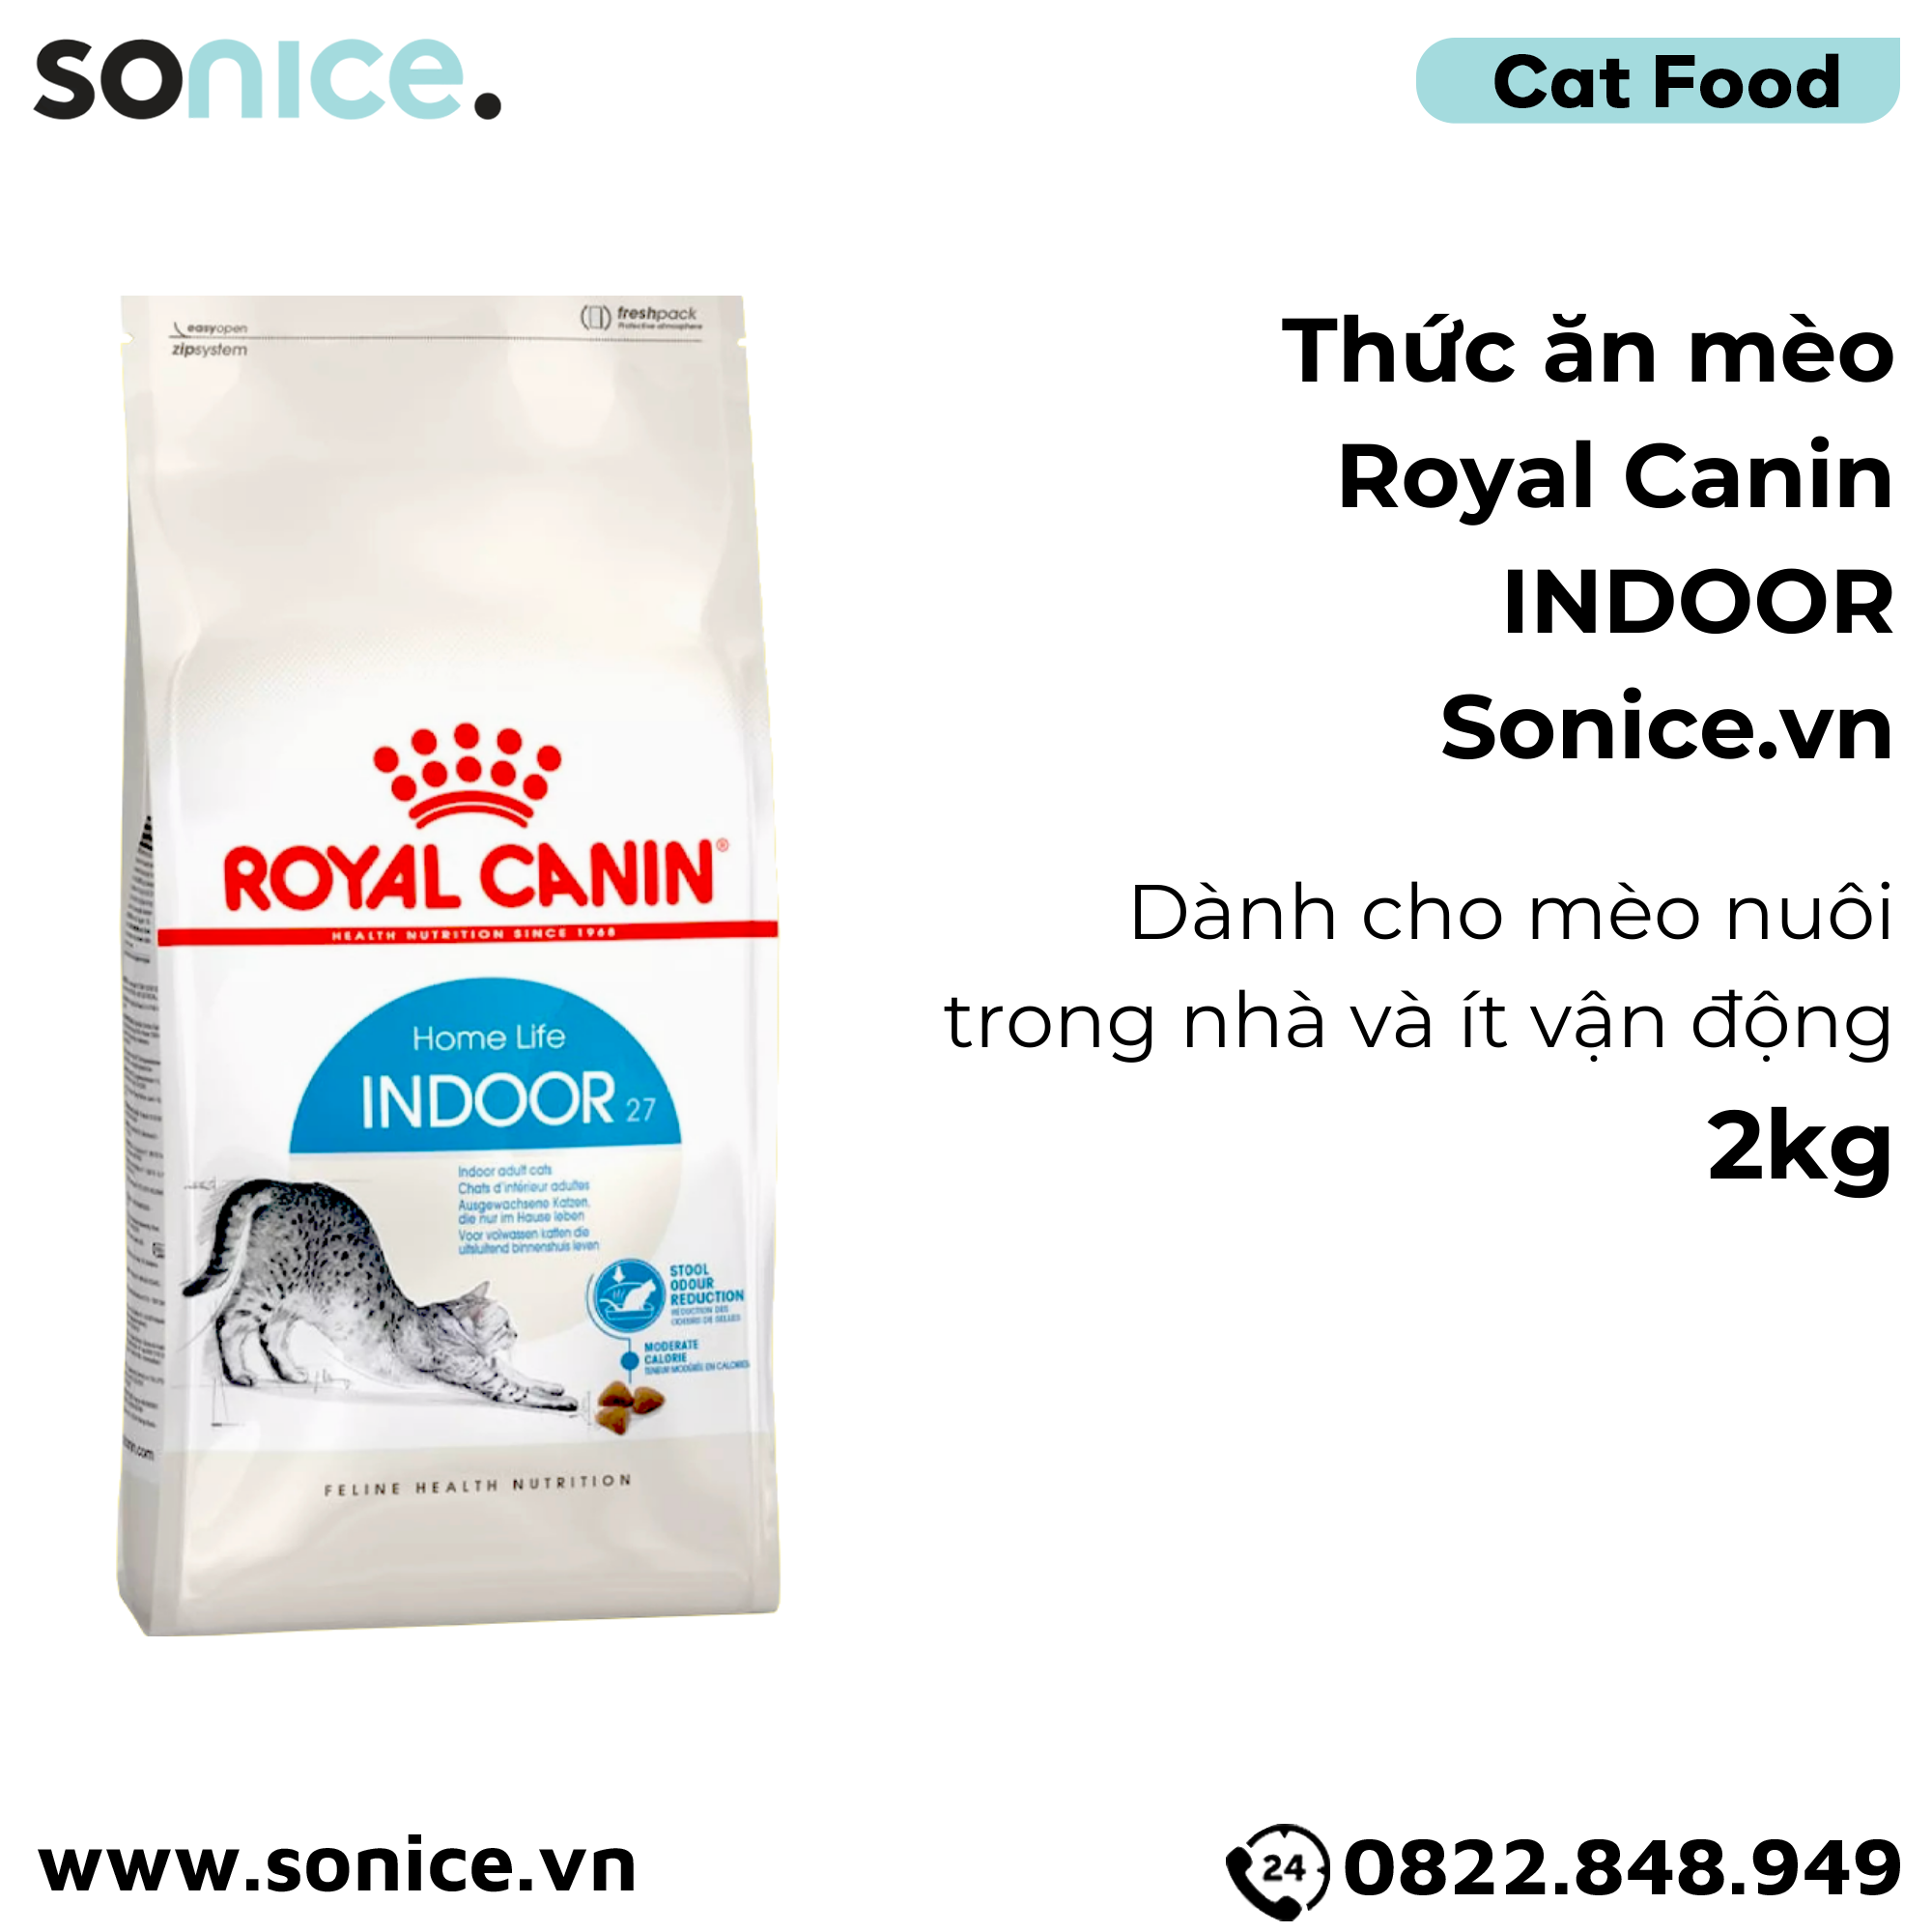  Thức ăn mèo Royal Canin INDOOR 2kg SONICE. 